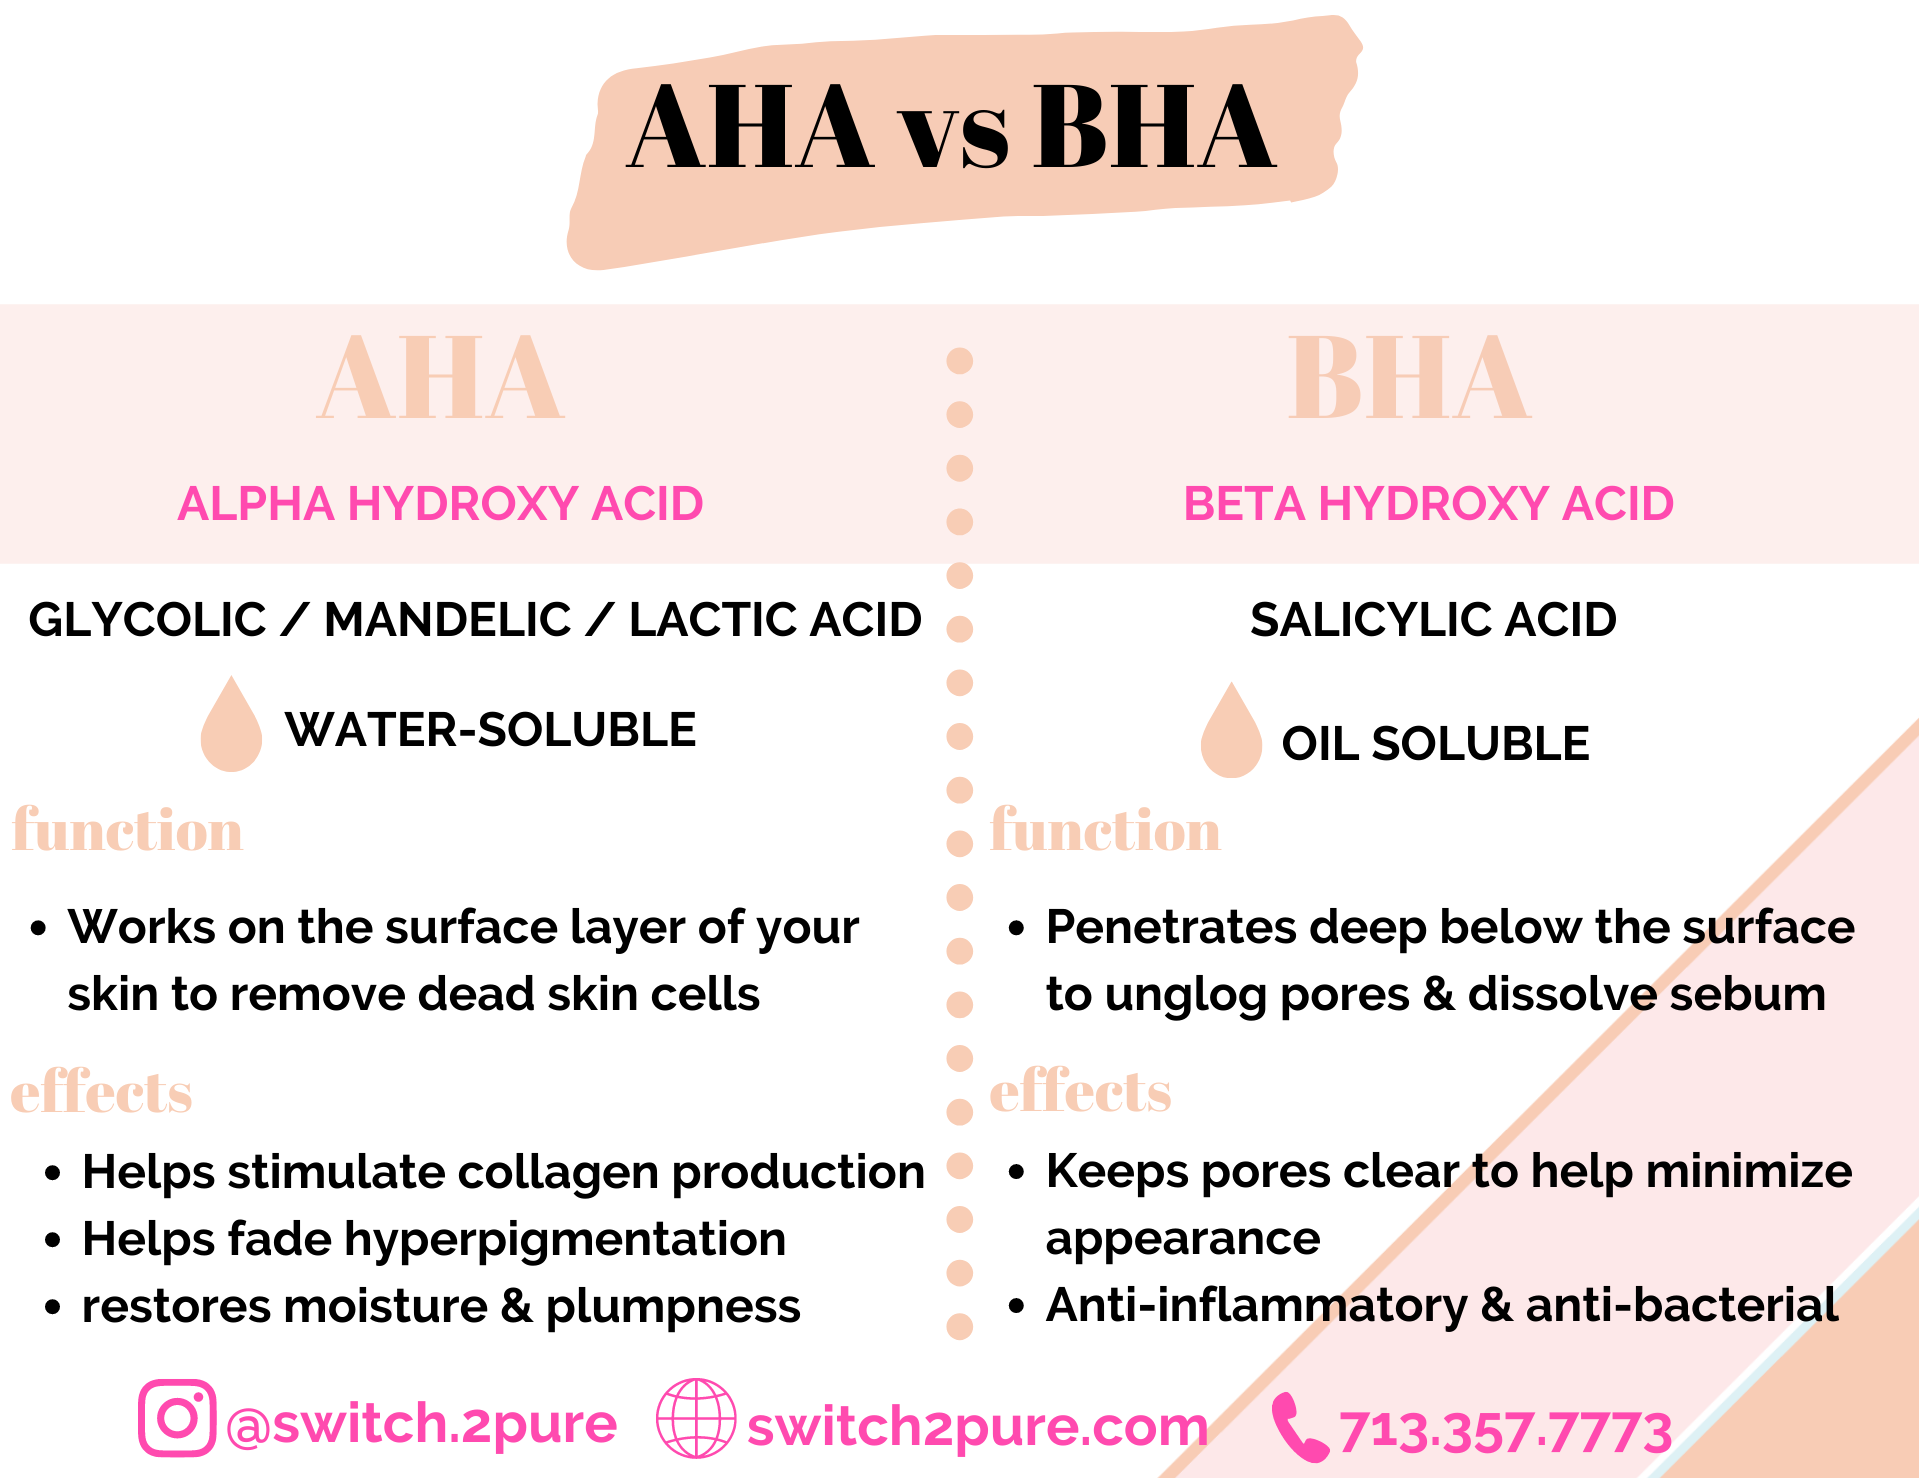 AHA vs BHA